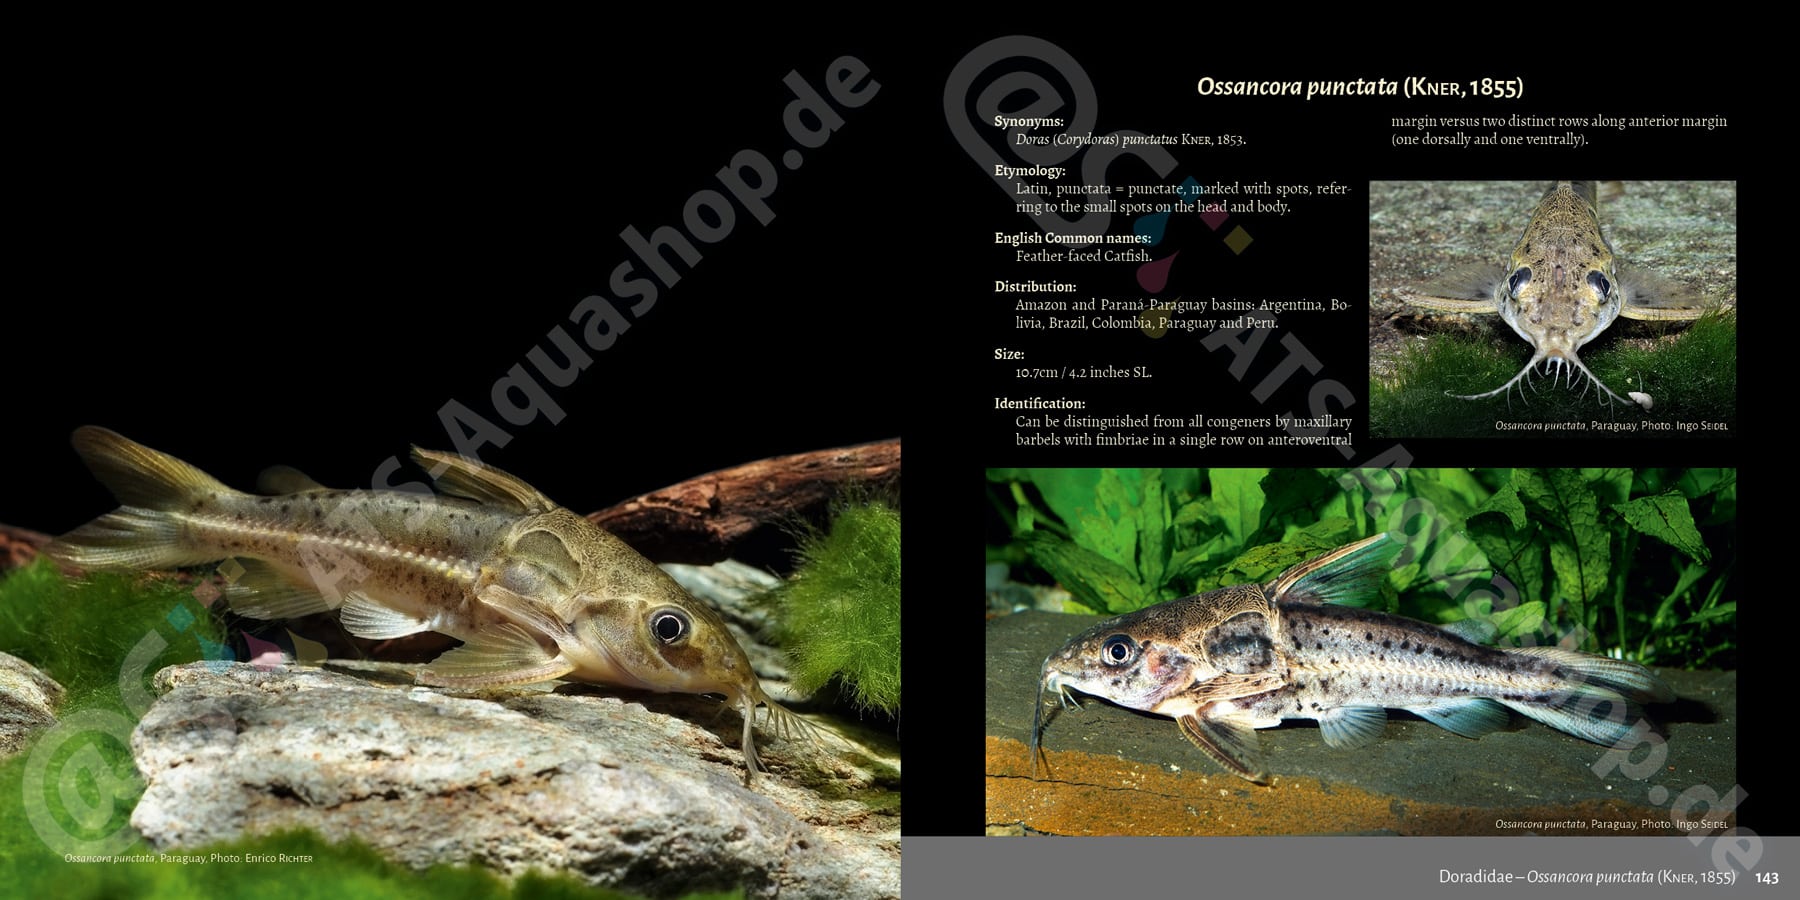 Banjos, Dorads and Woodcats Aspredinidae, Doradidae and Auchenipteridae Catfishes Steven Grant